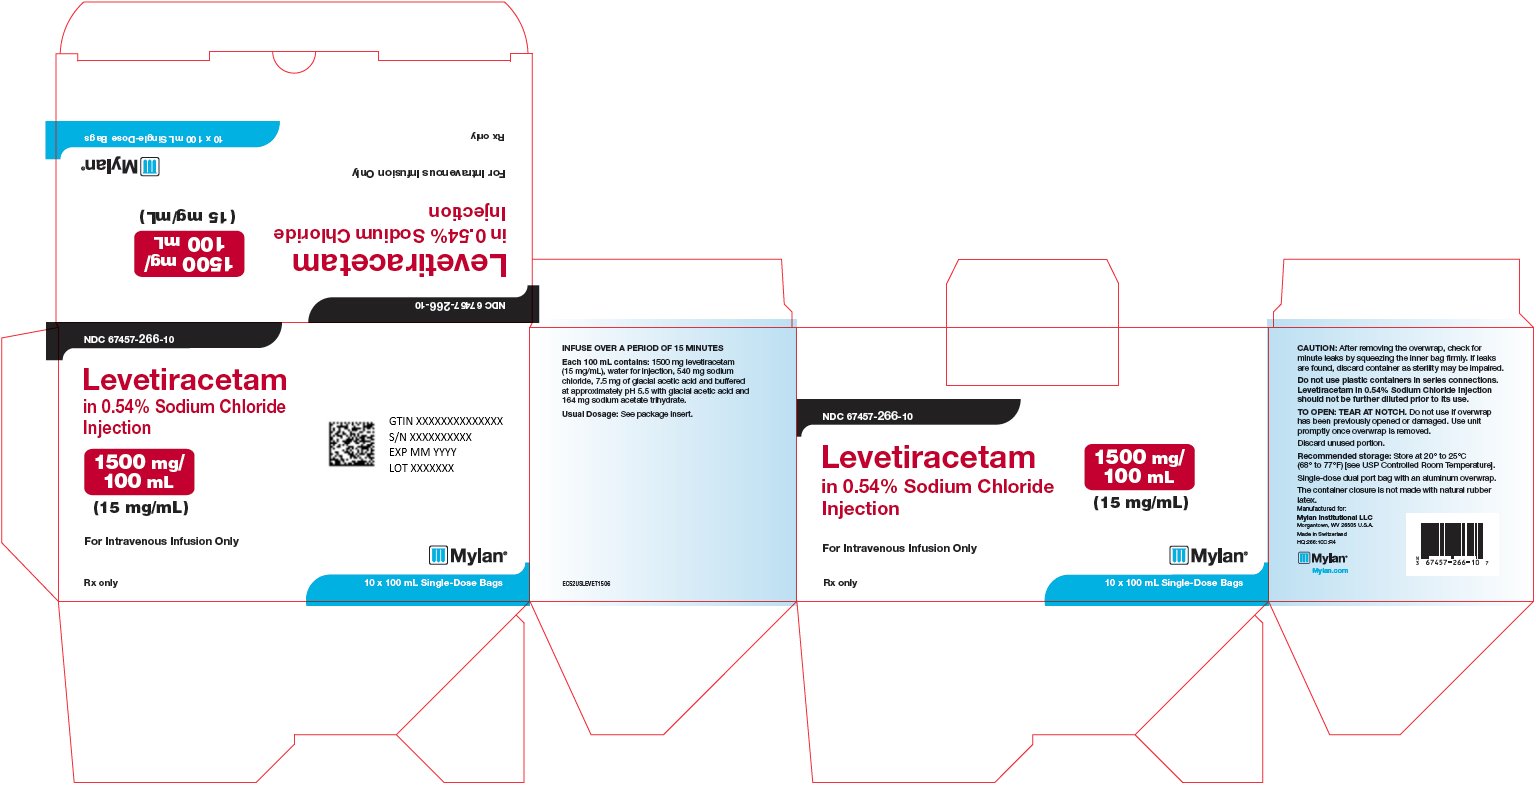 Levetiracetam Injection 1500 mg/100 mL Carton Label